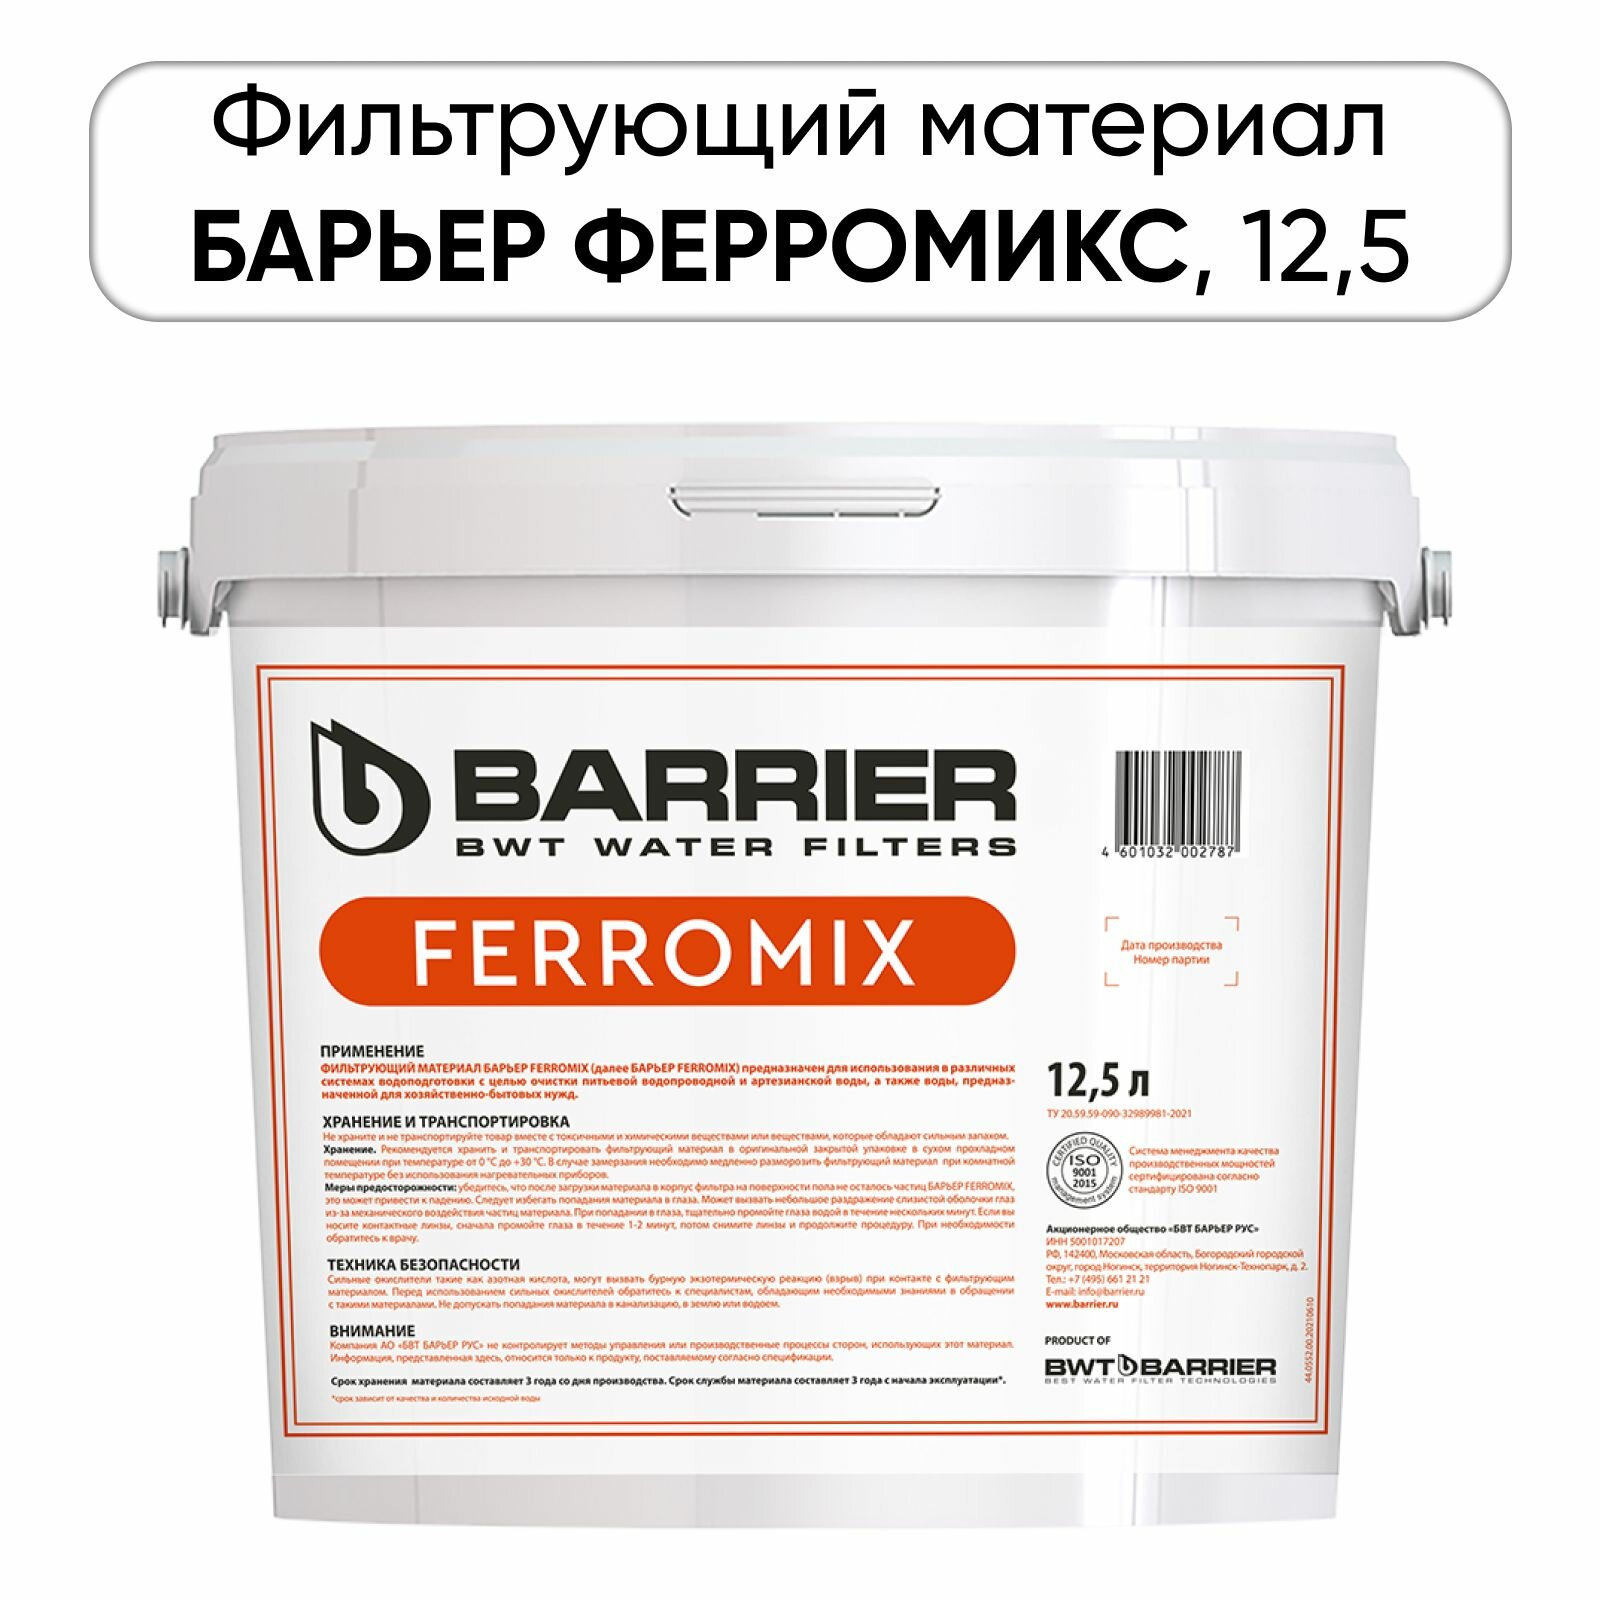 Фильтрующий материал БАРЬЕР ферромикс, 12,5л